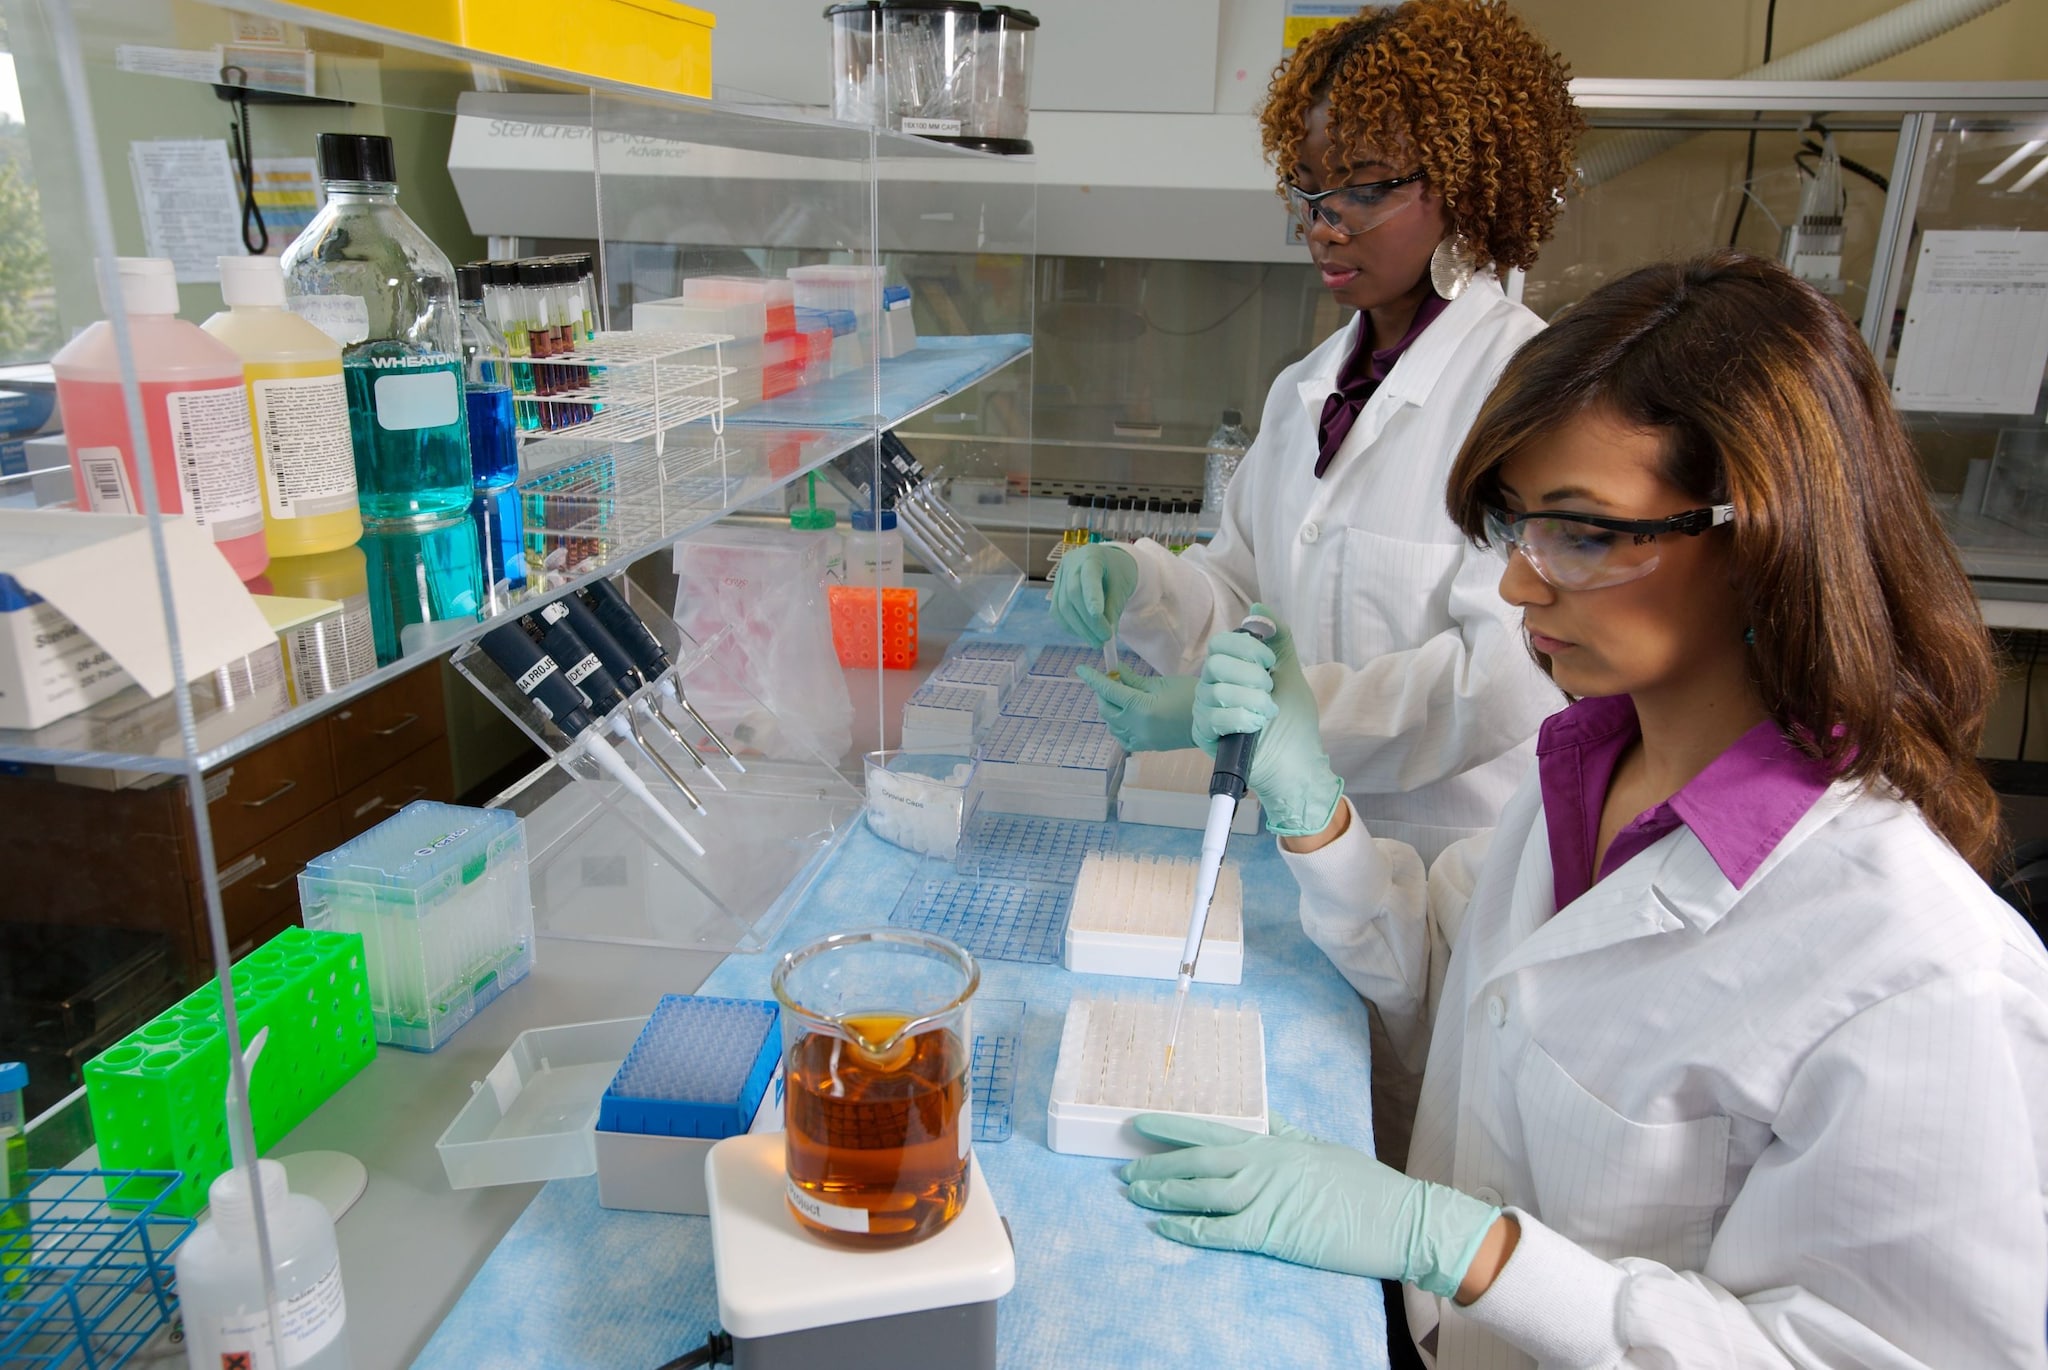 Decorative: Lab scene with female scientists